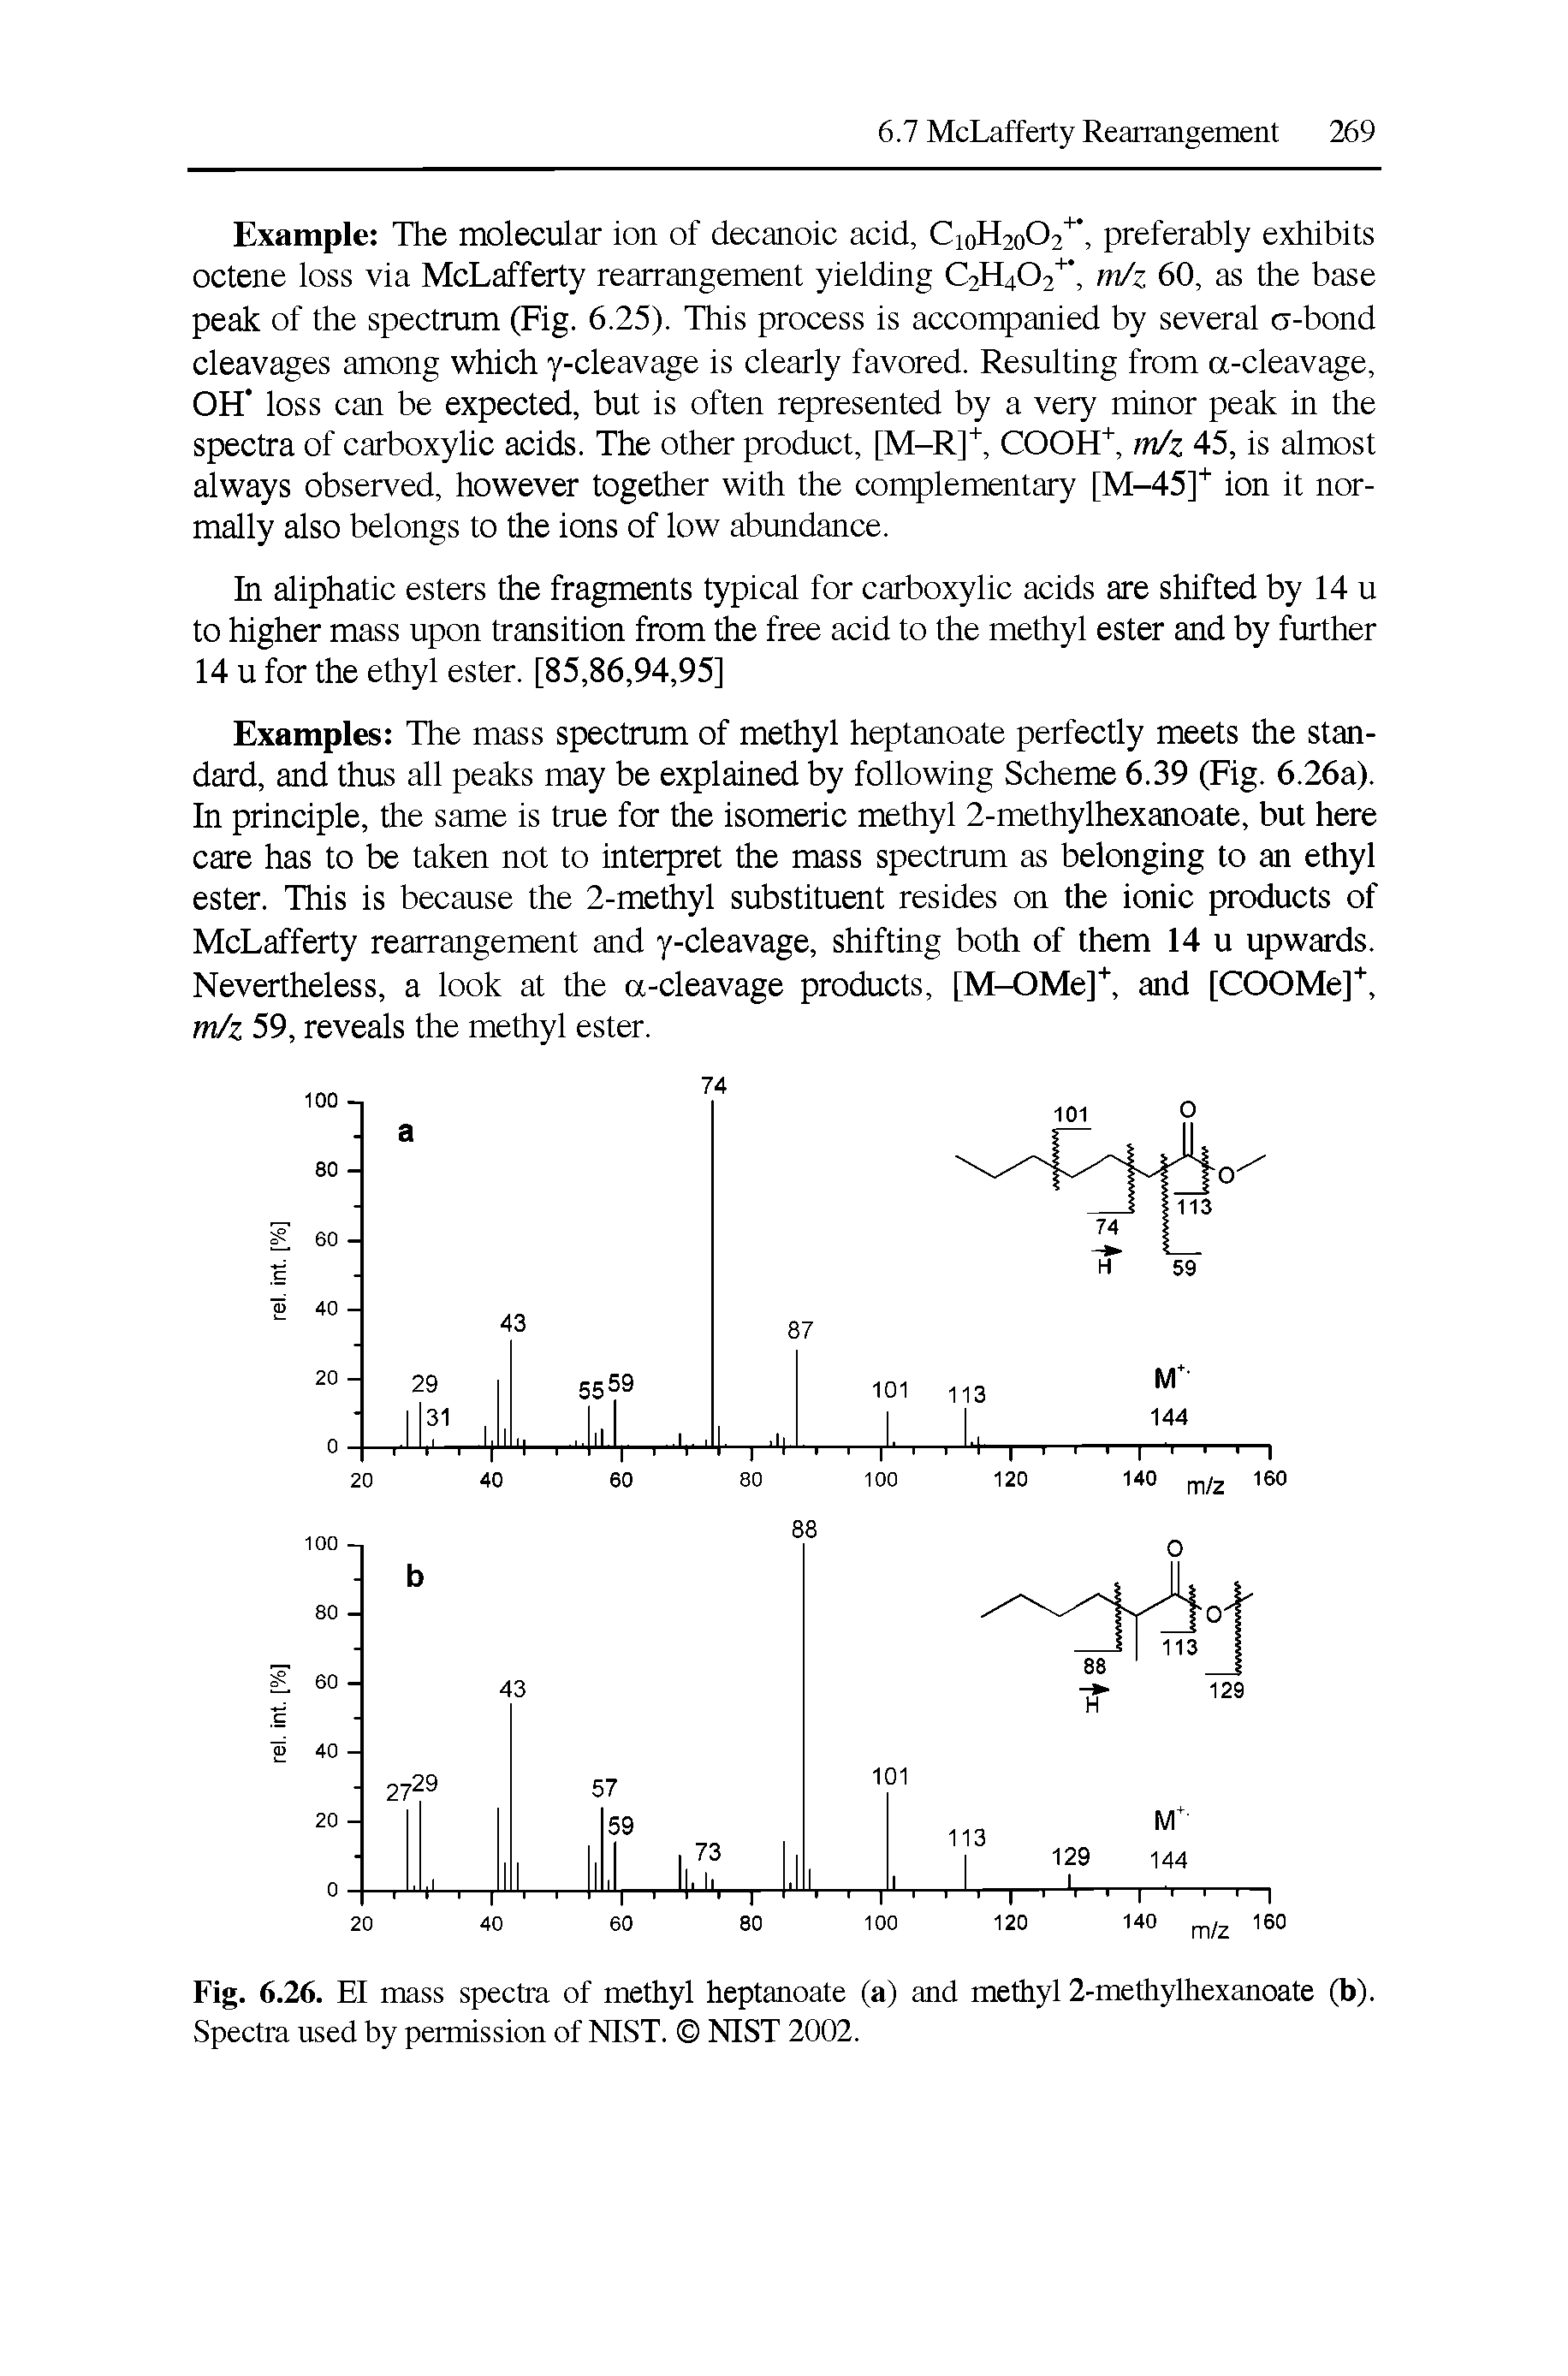 Fig. 6.26. El mass spectra of methyl heptanoate (a) and methyl 2-methylhexanoate (b). Spectra used by permission of NIST. NIST 2002.